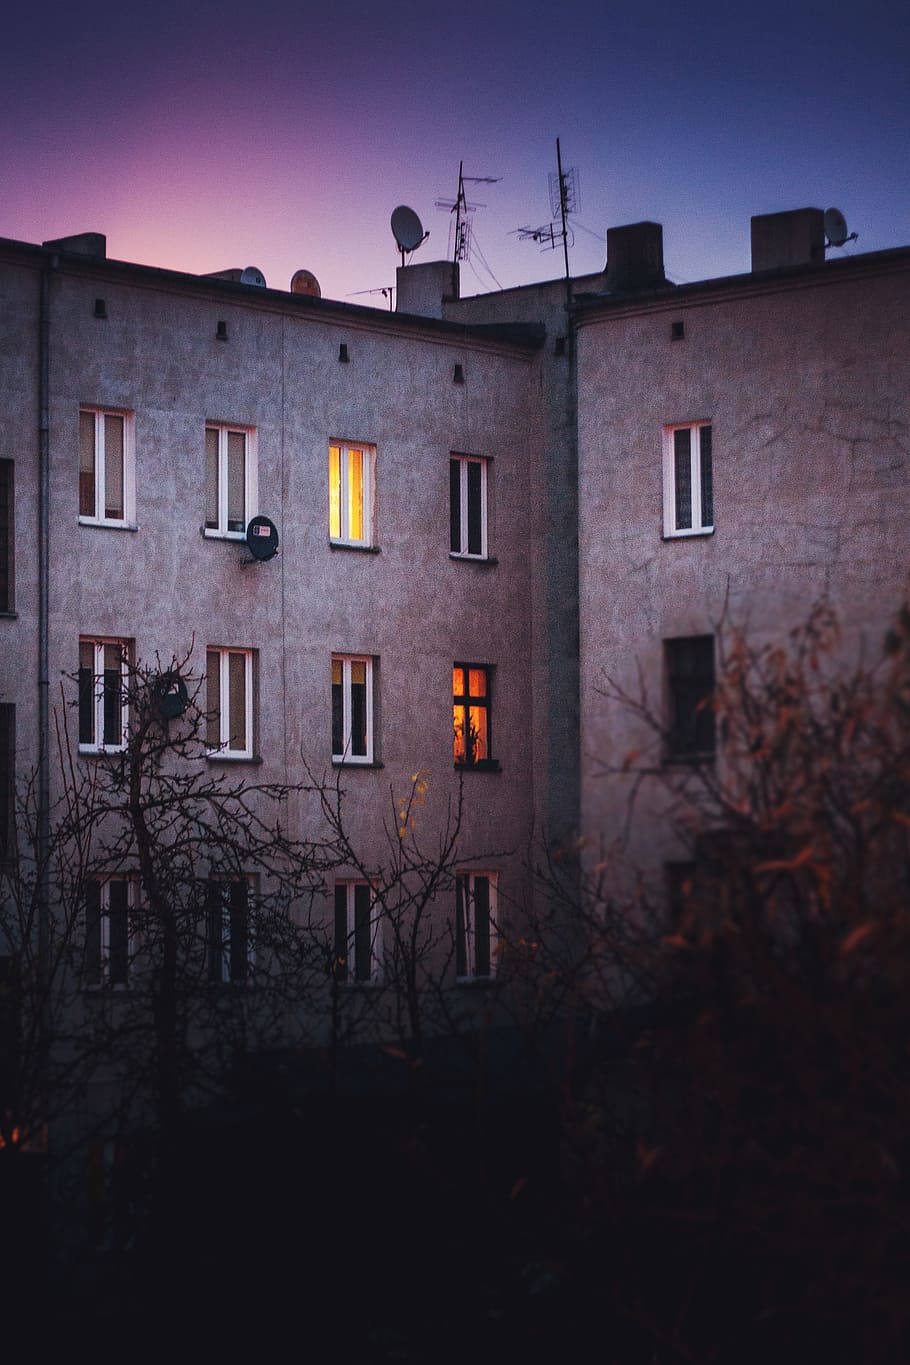 old, tenement, house, building, windows, night, city, vintage, lodz, polska